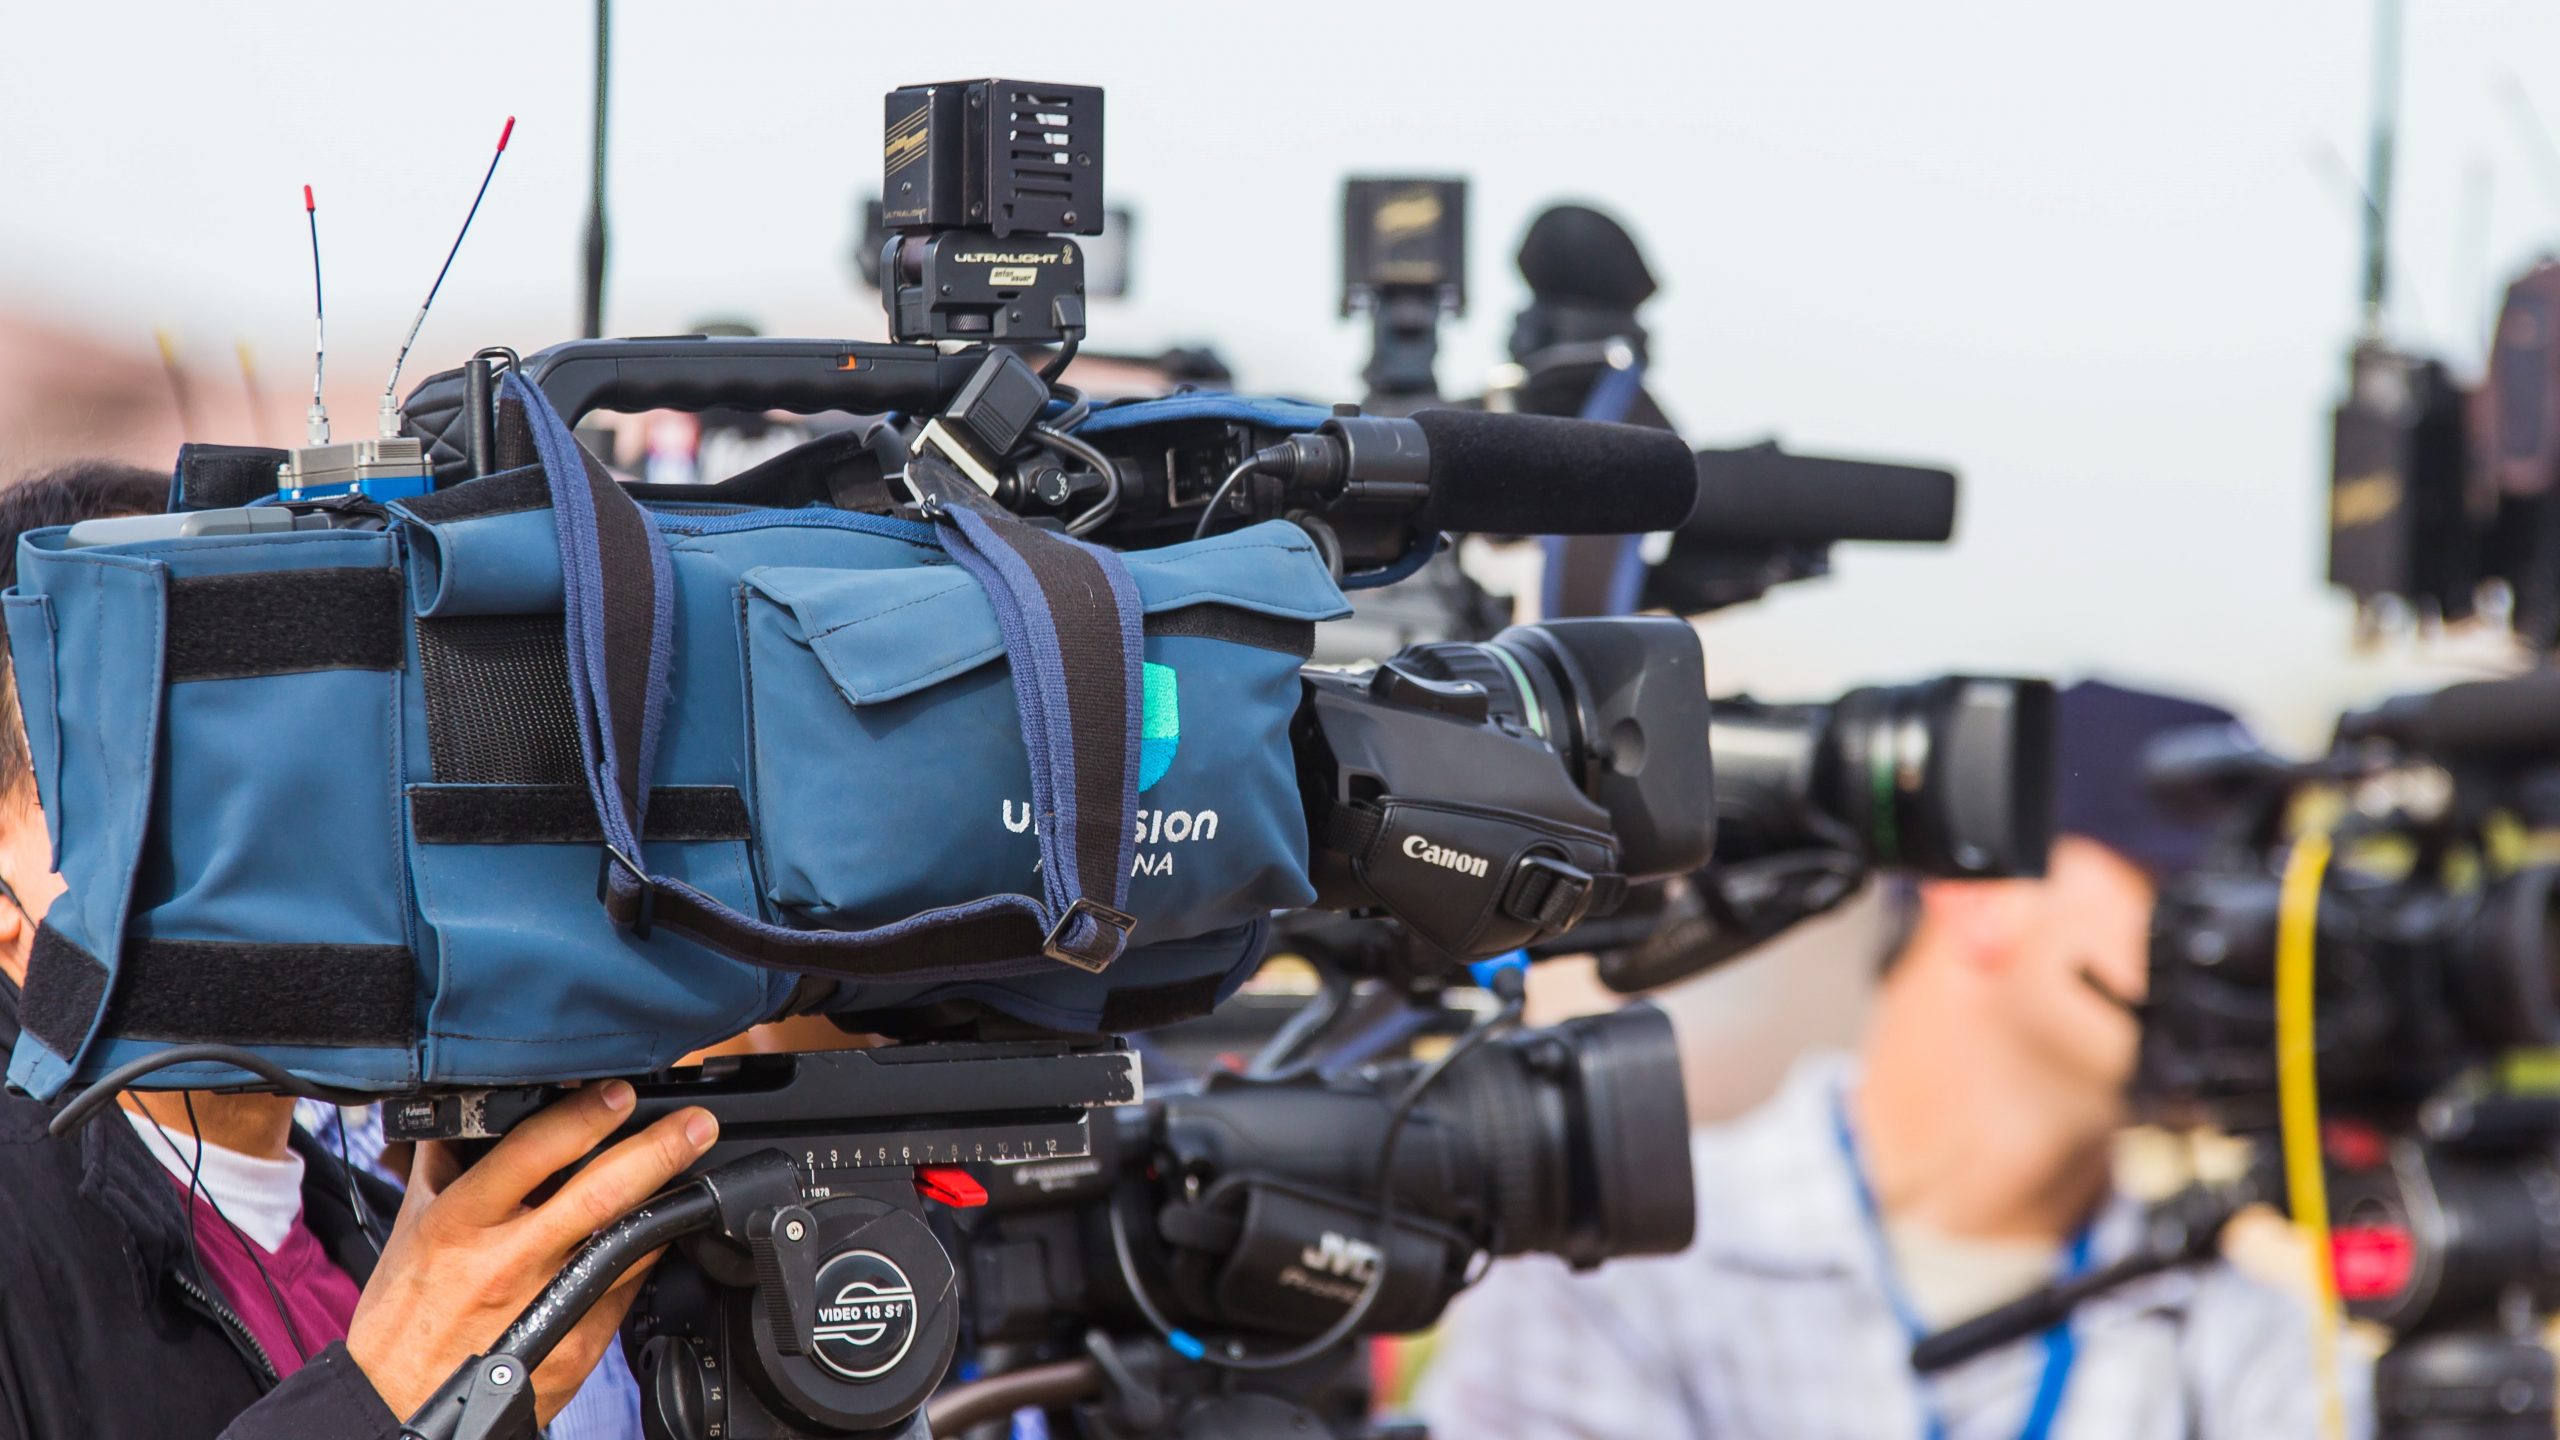 Media Freedom Remains Major Concern in Balkans, Watchdog Says